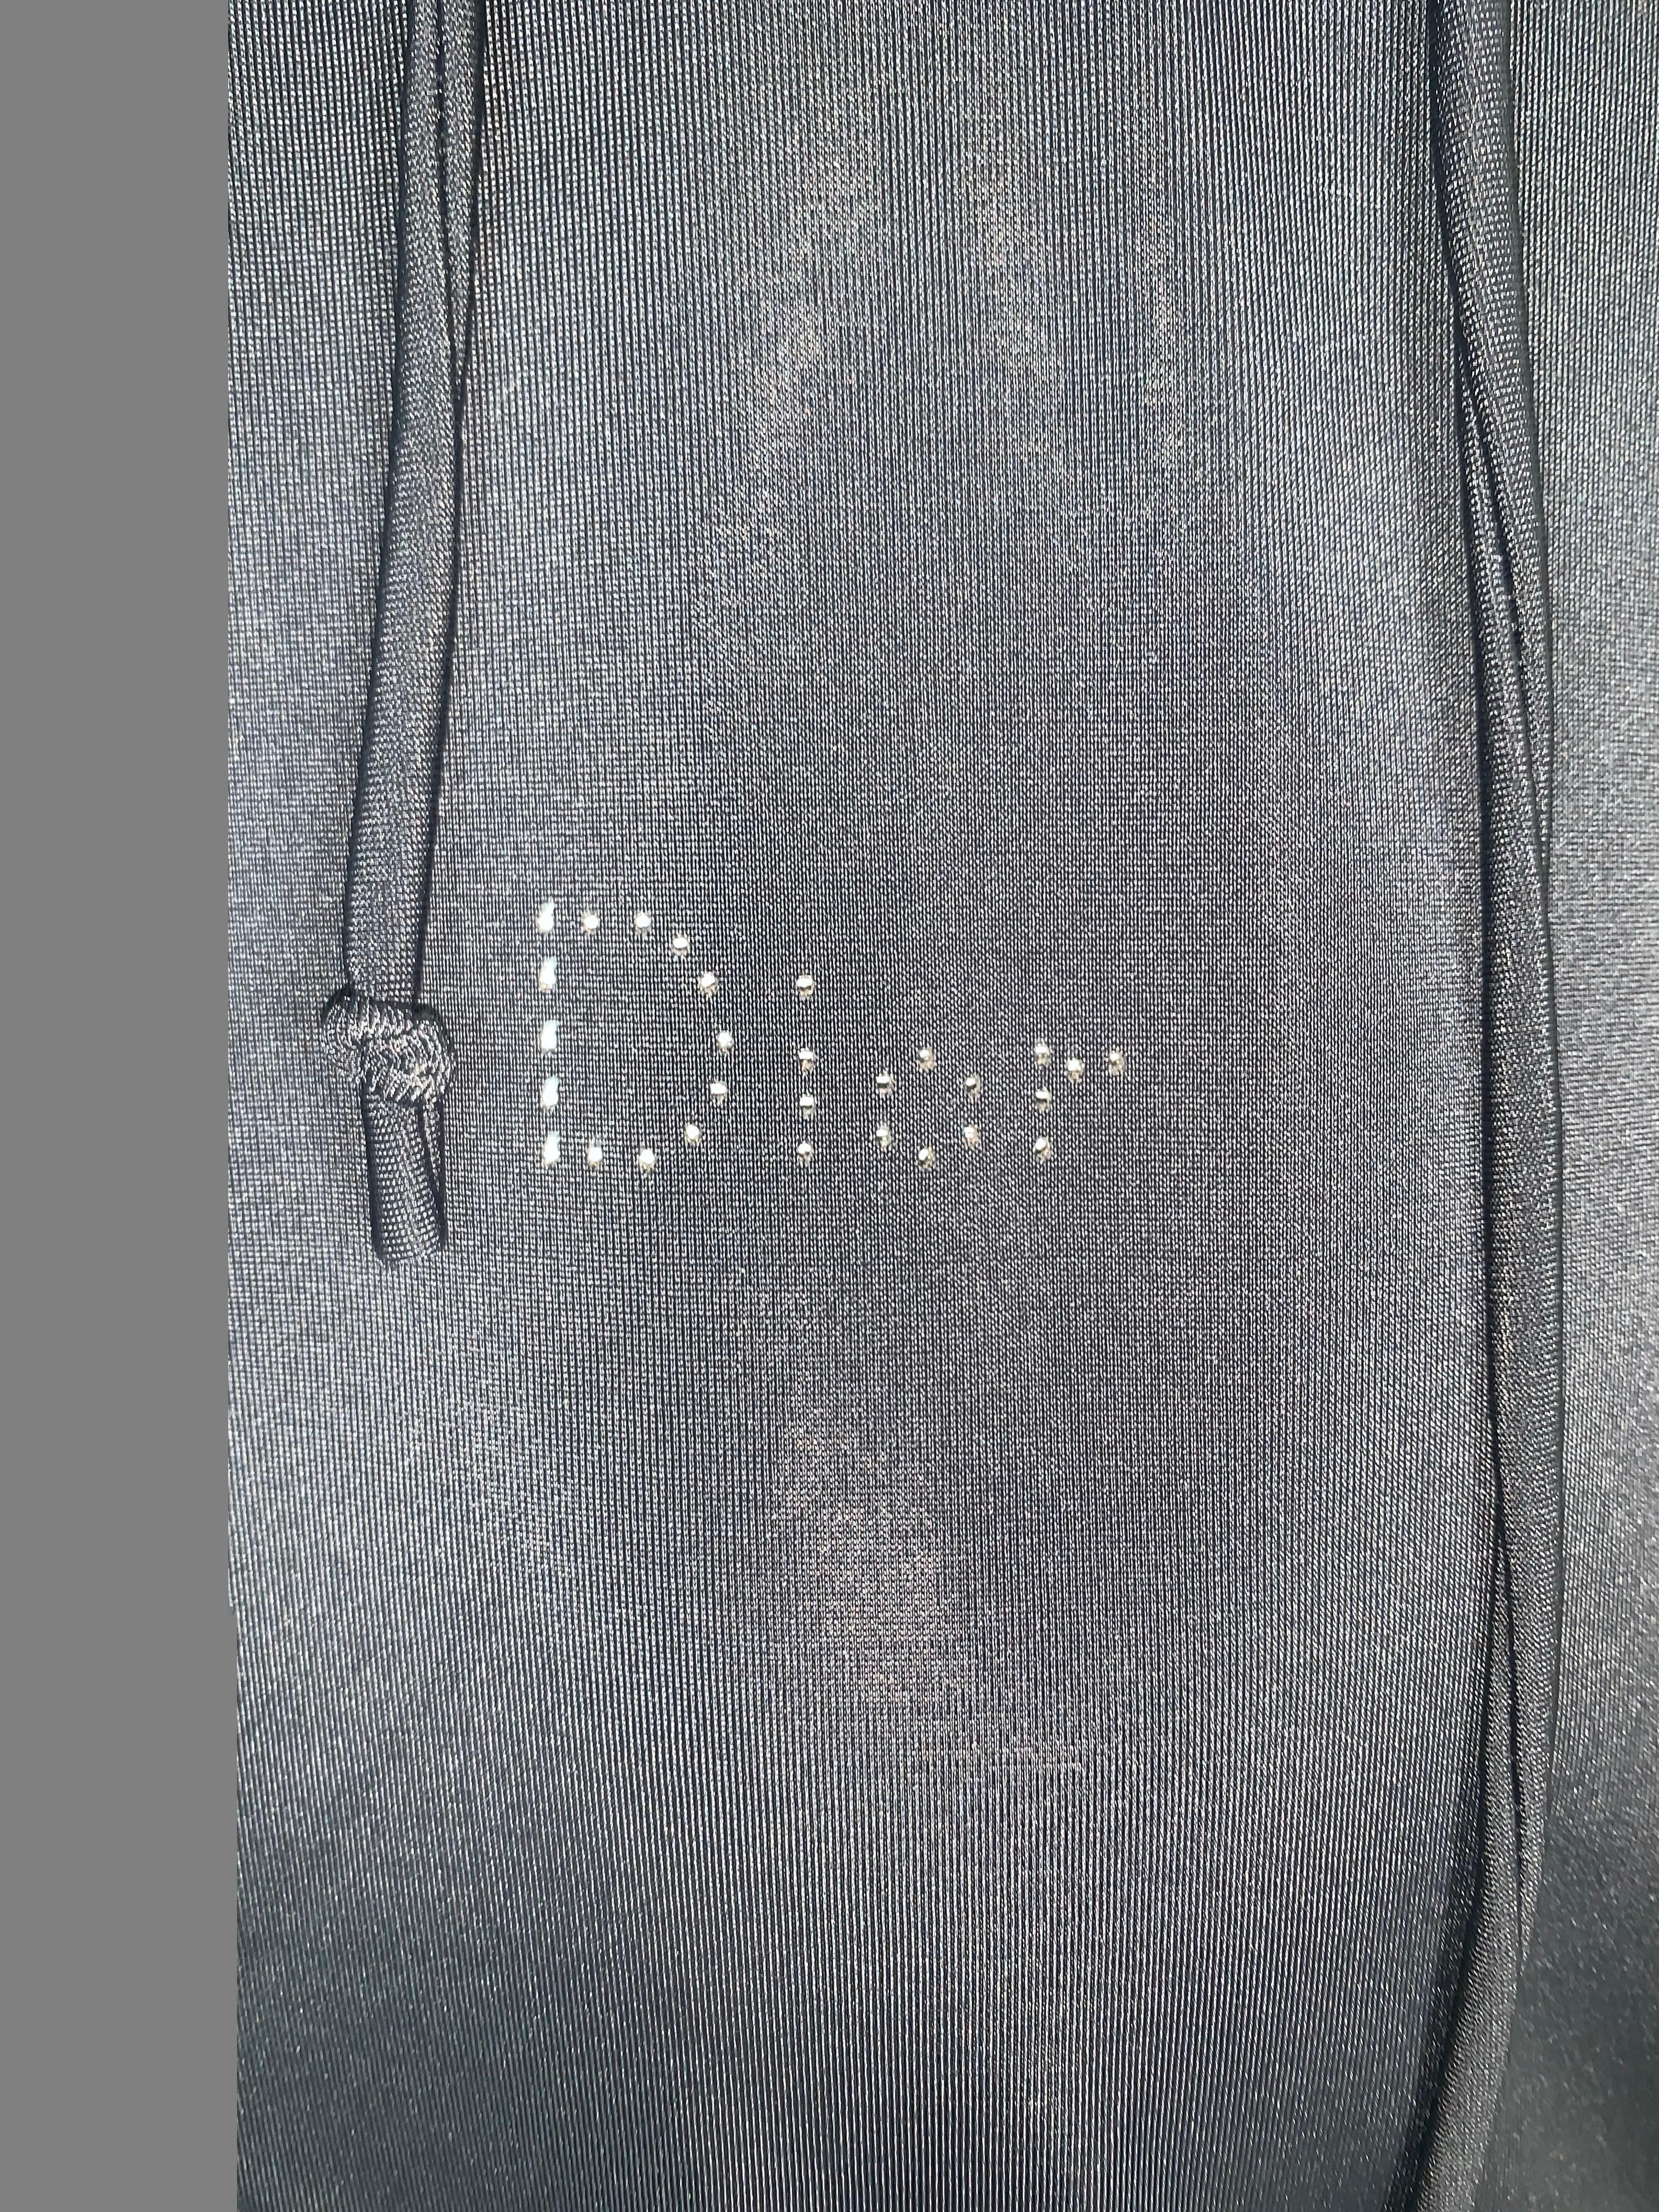 S/S 2000 Christian Dior Black Plunging High Slits Logo Monogram Mini Dress 1